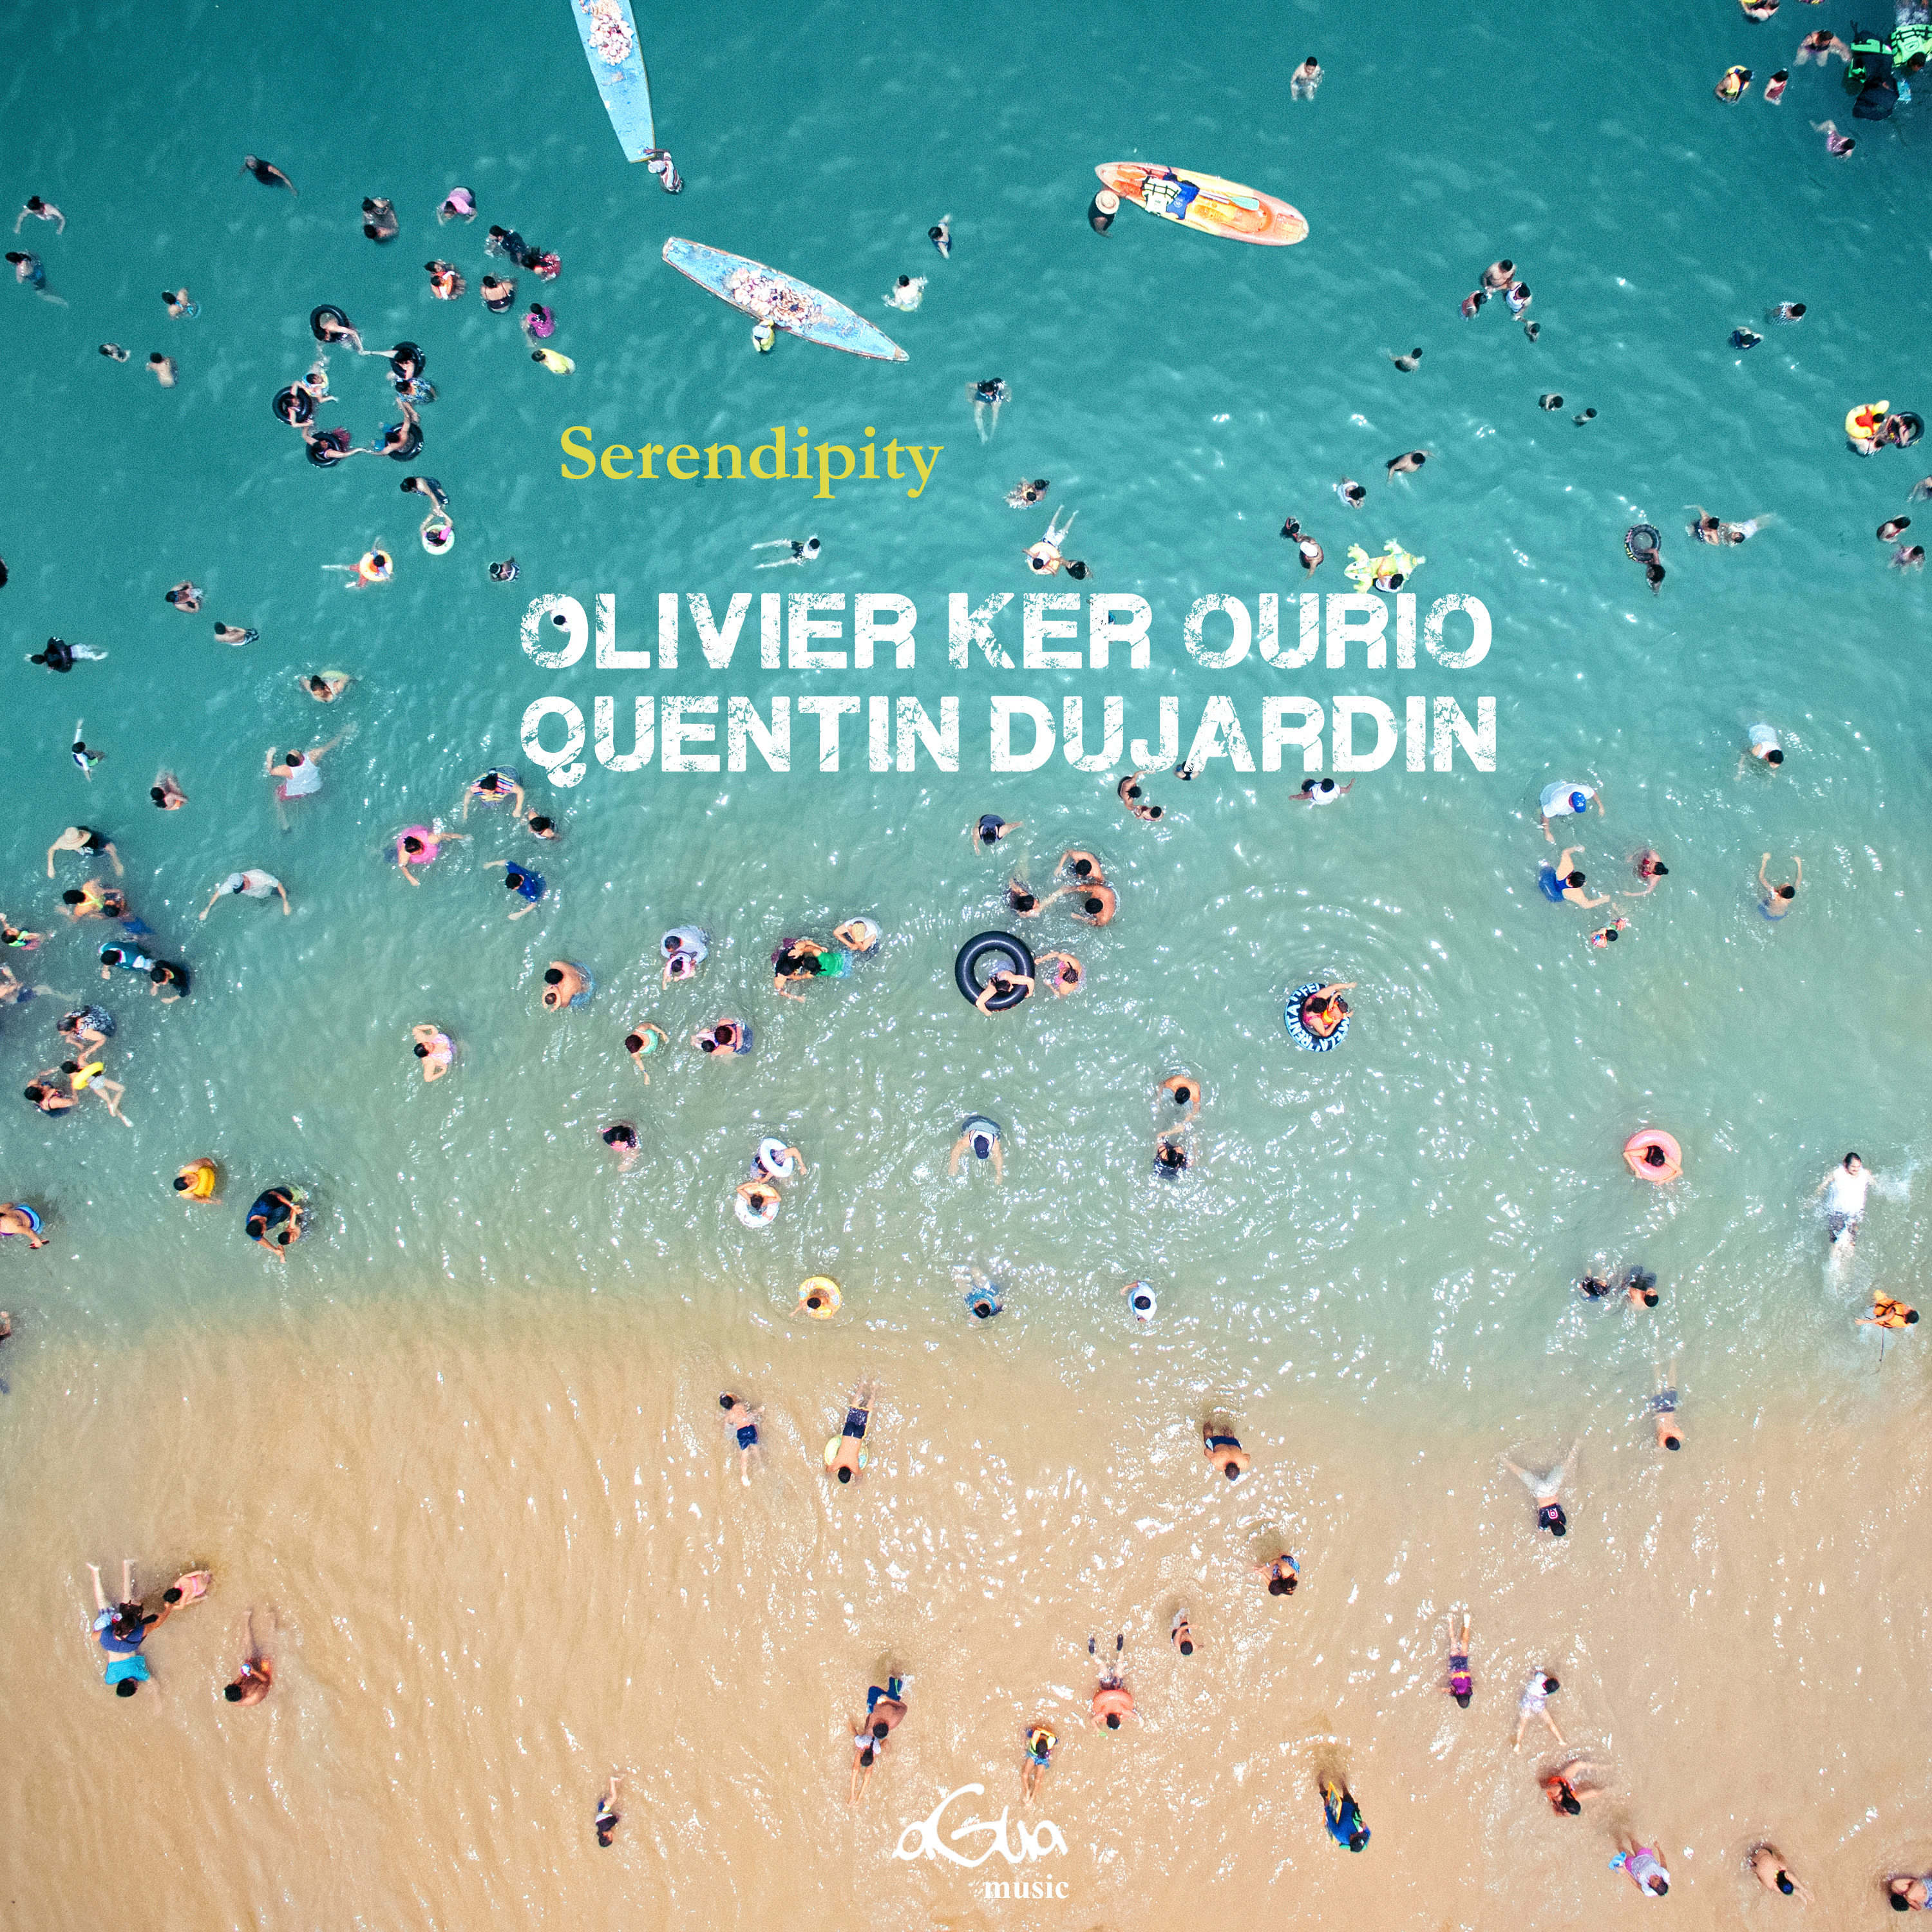 Quentin Dujardin/Olivier Ker Ourio - Serendipity